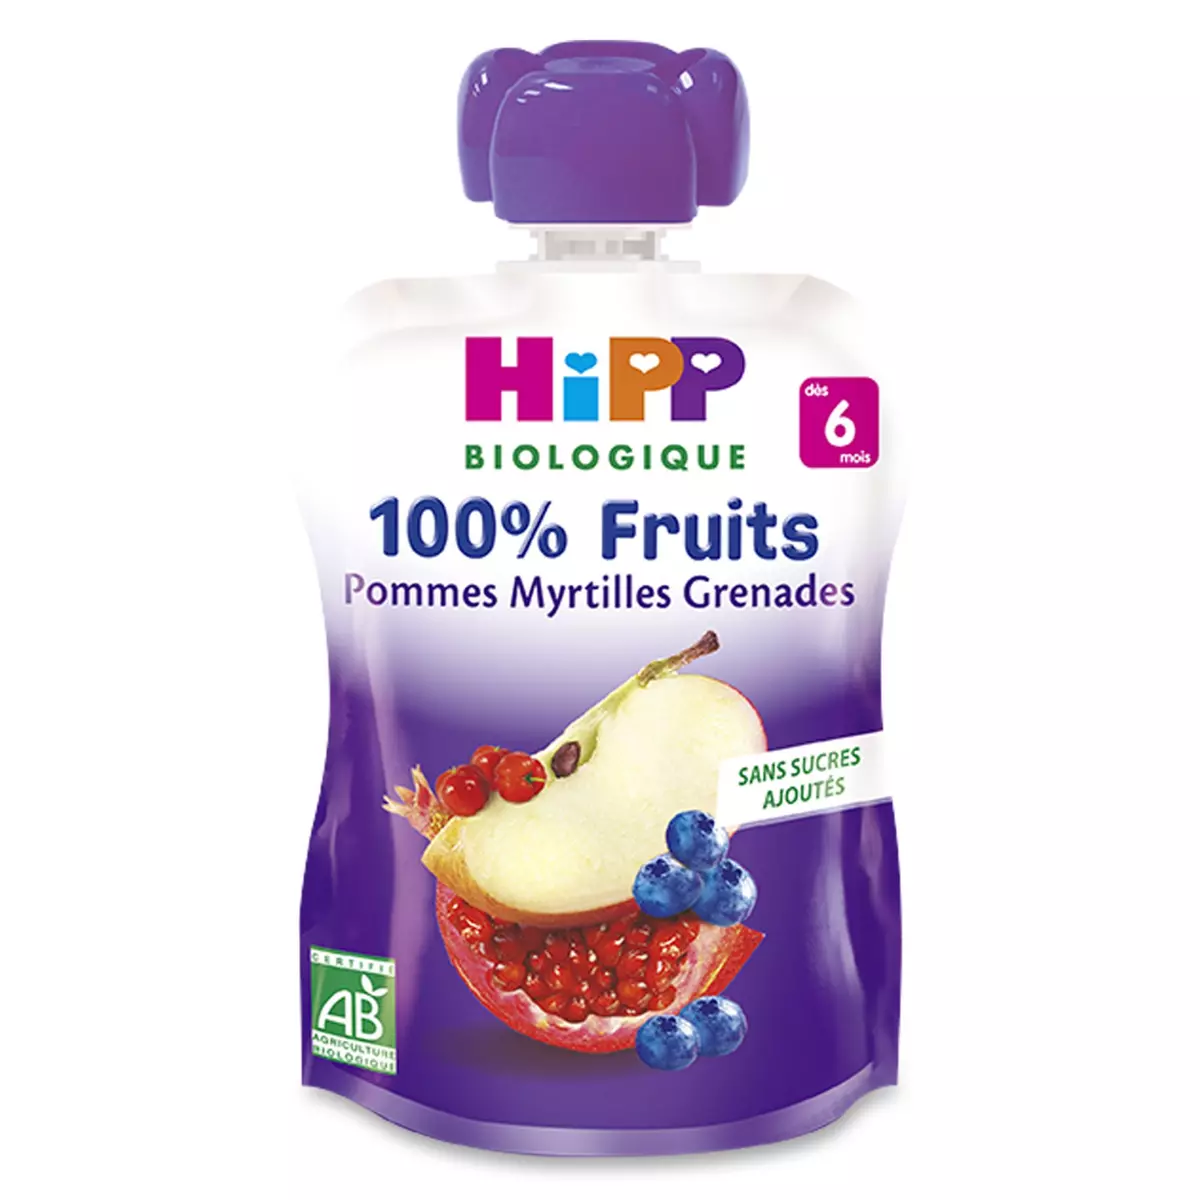 HIPP Gourde Dessert bio pommes myrtilles grenades des 6 mois 90g